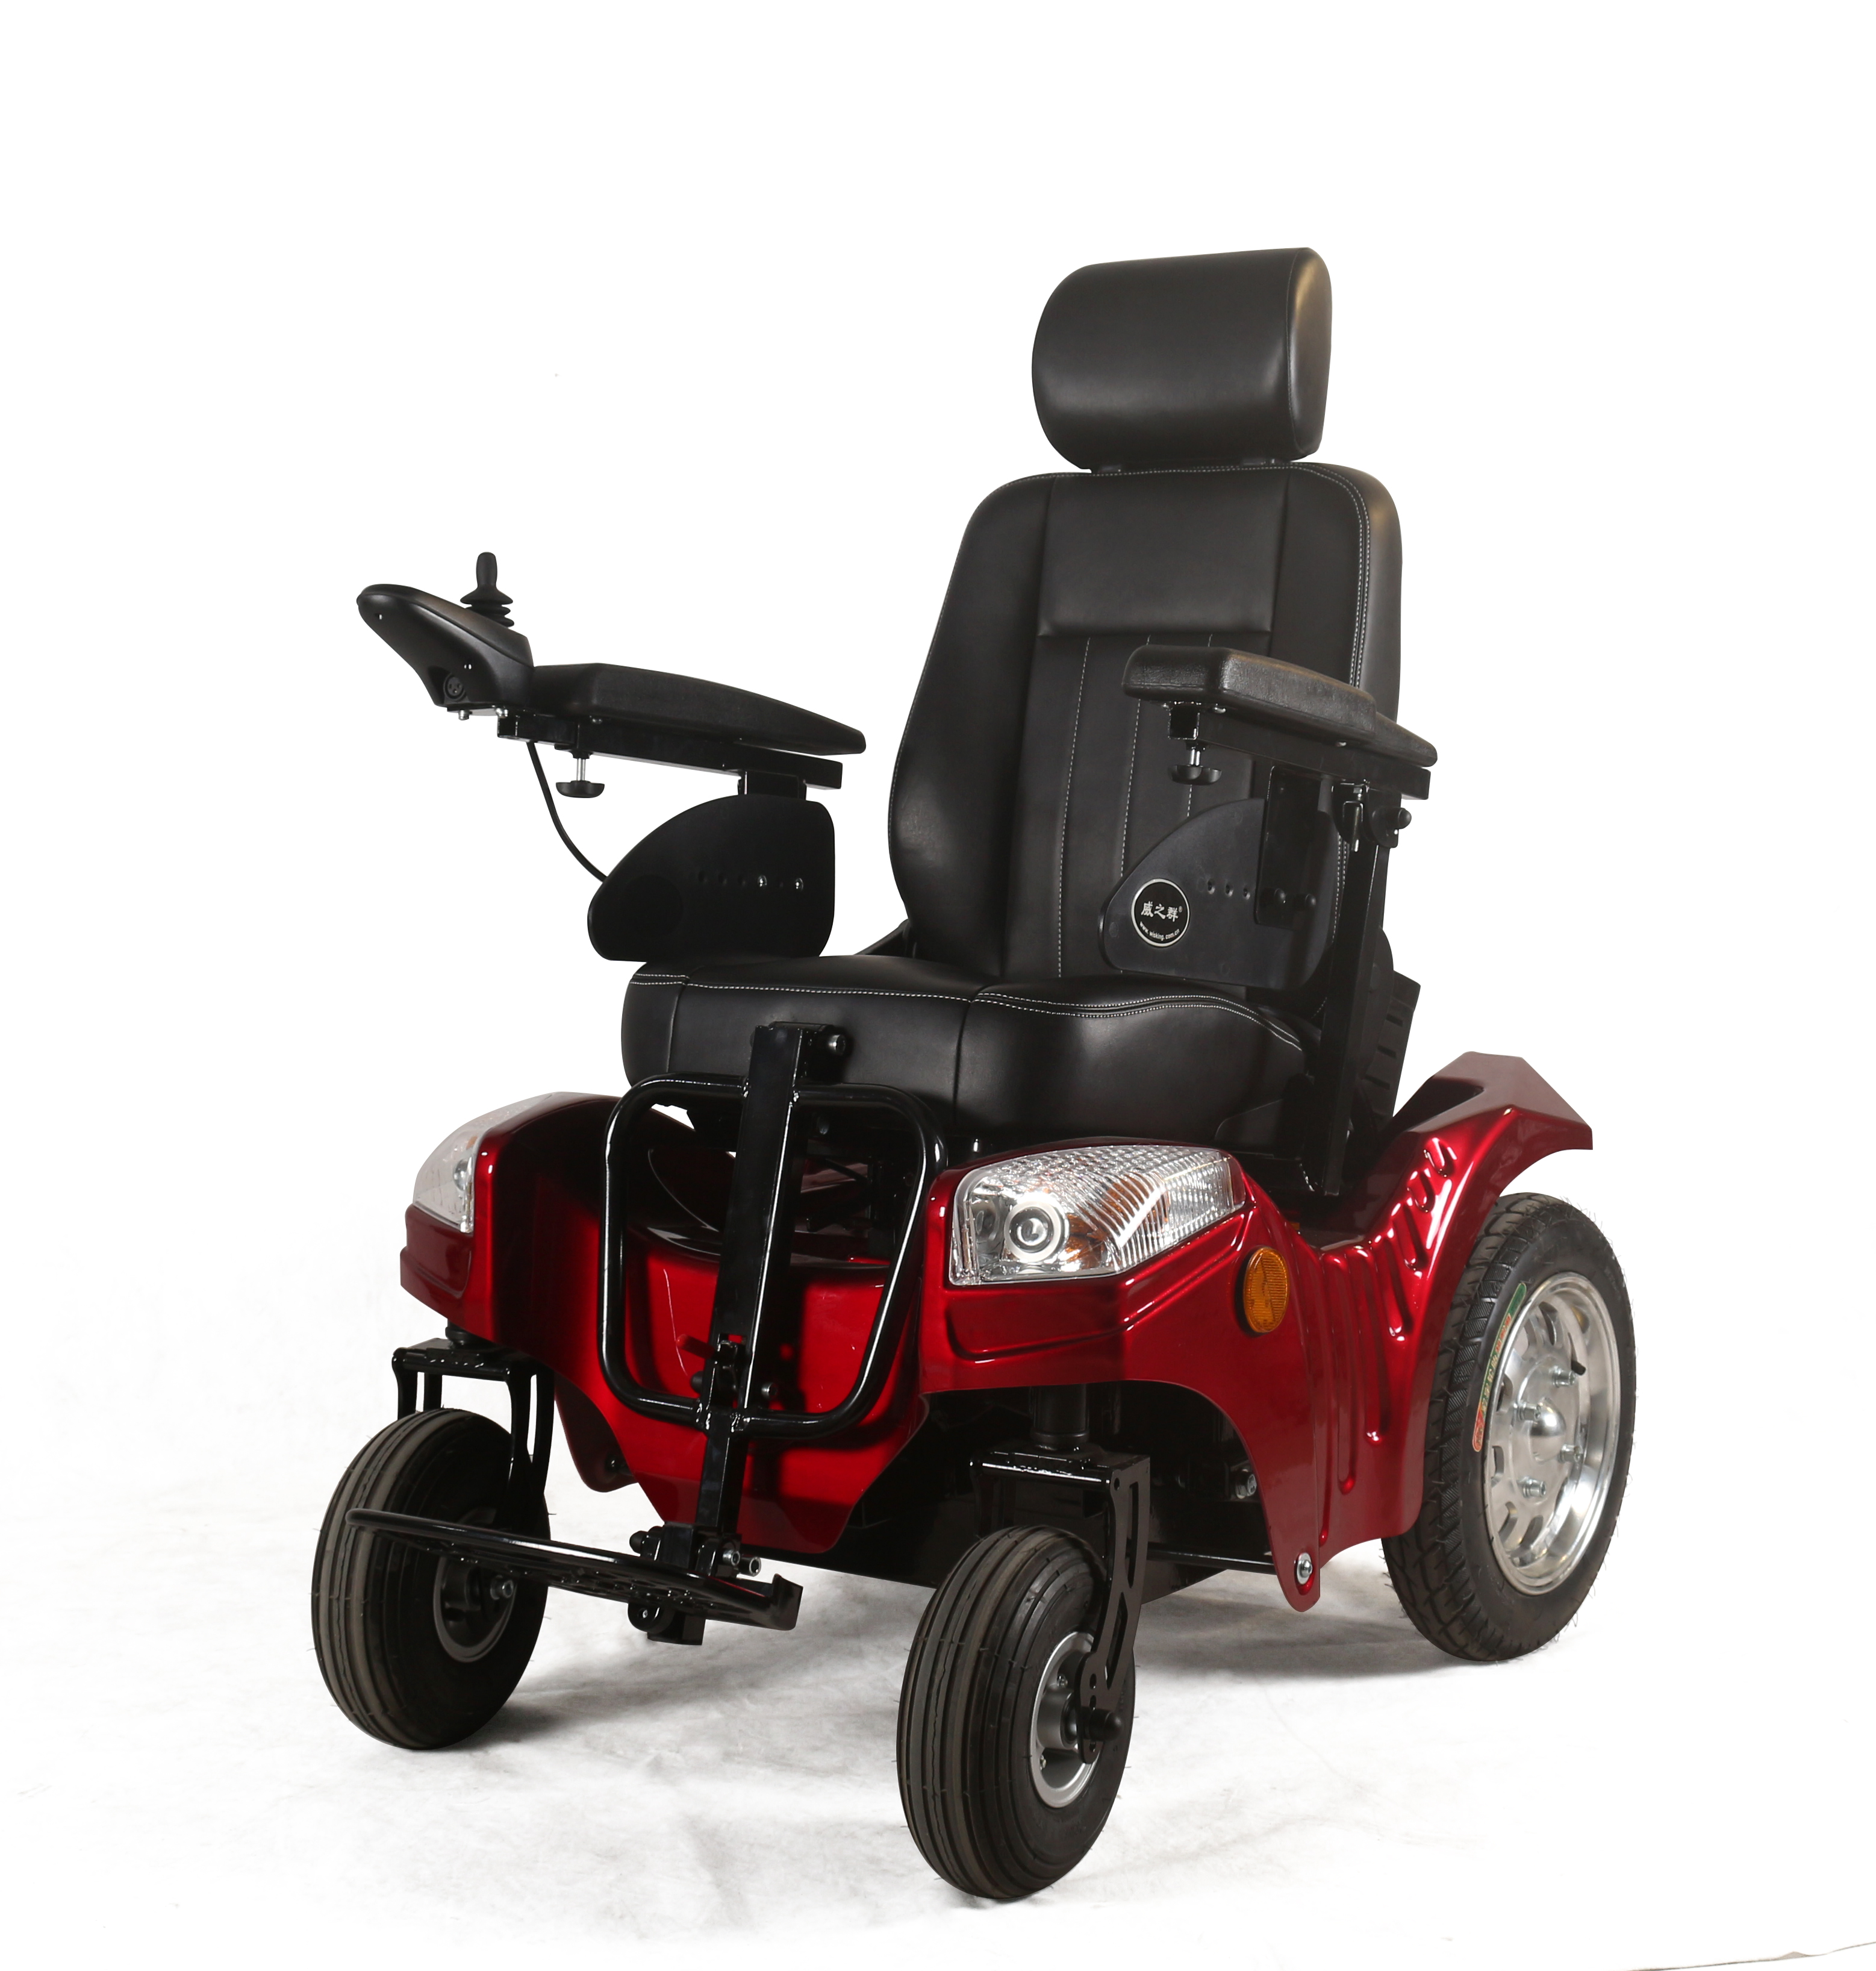 WISKING luxury outdoor power wheelchair for heavy body